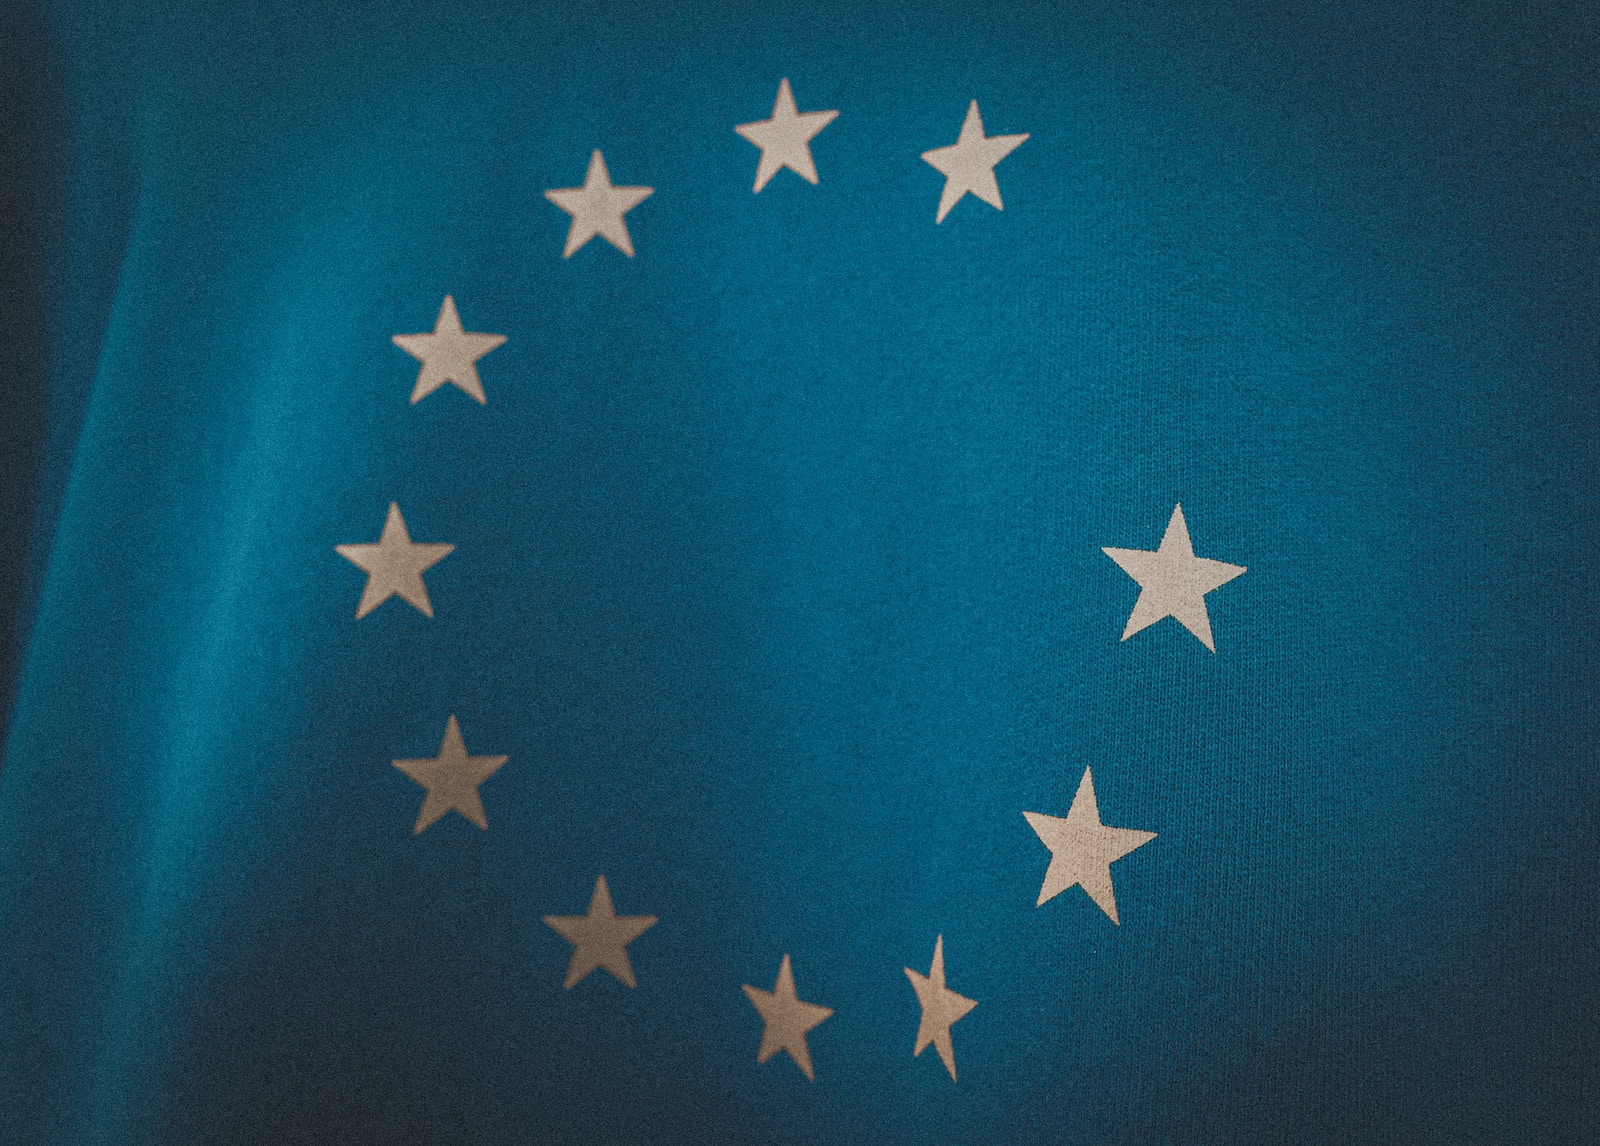 eu news - blue and white star print textile